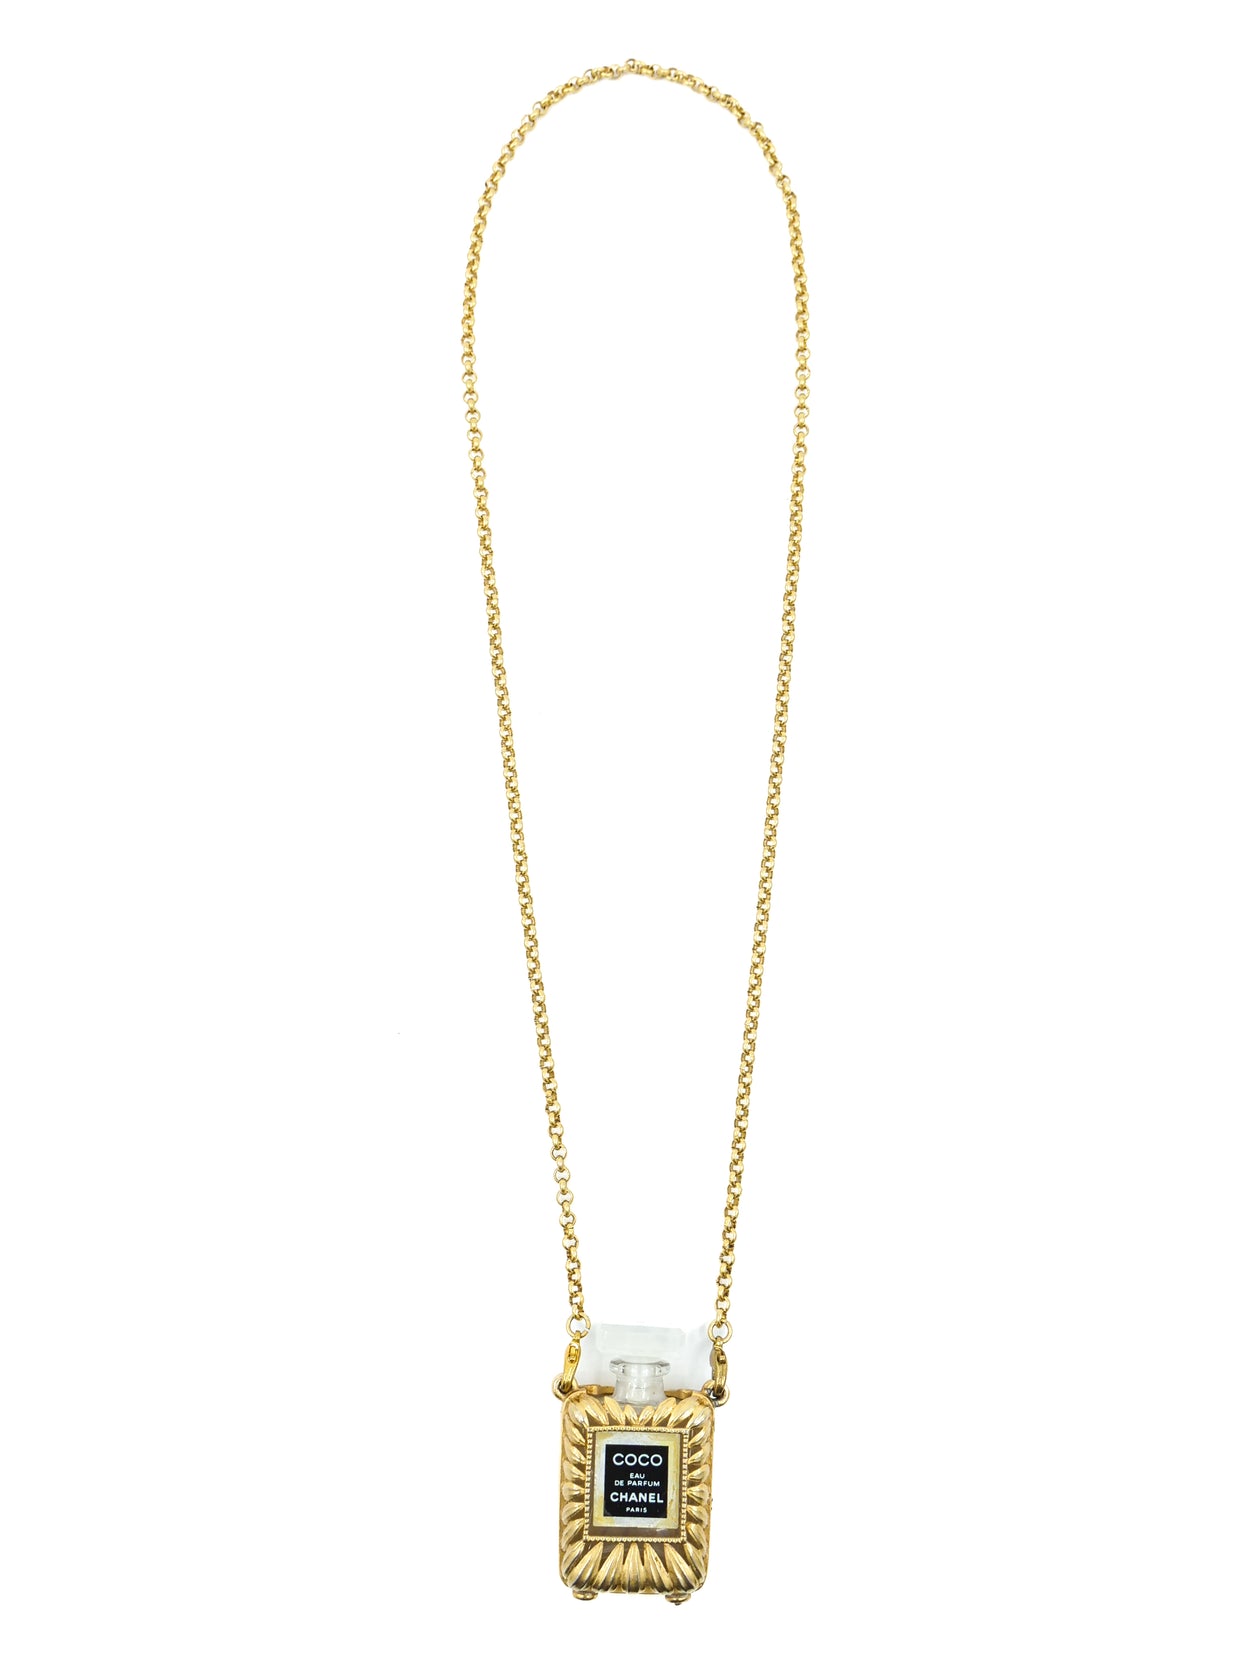 Chanel Perfume Goldtone Pendant Necklace